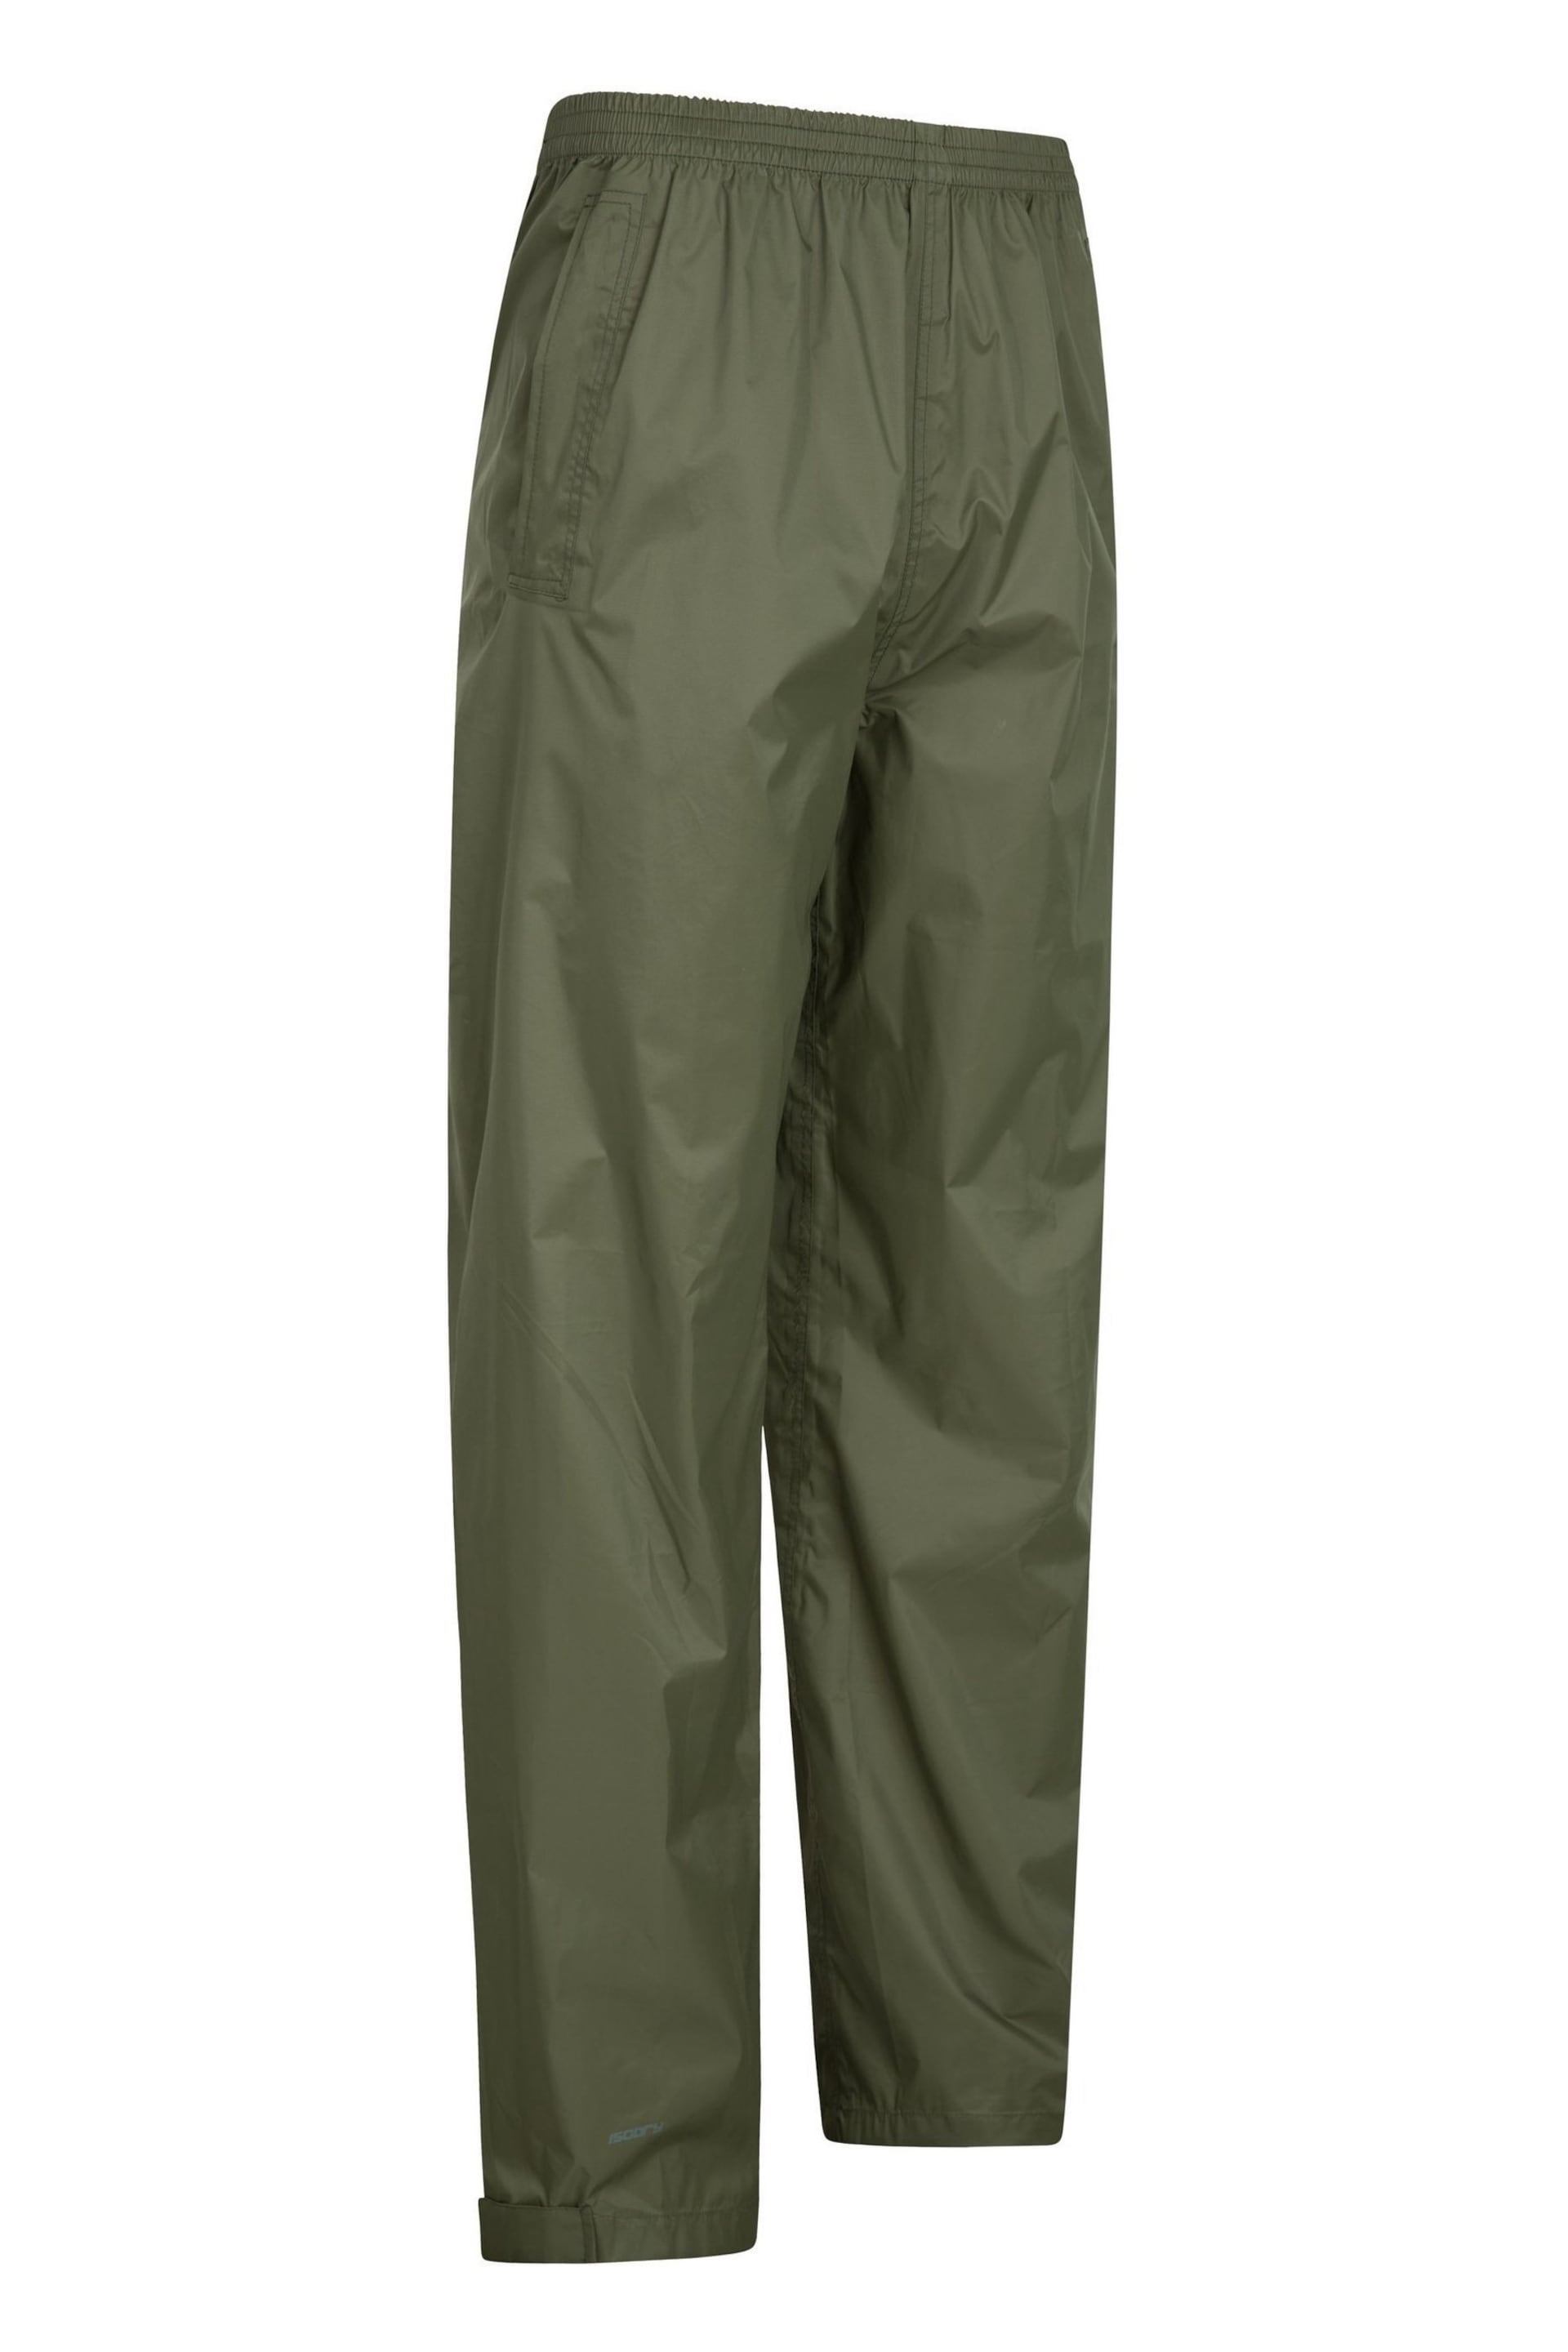 Mountain Warehouse Green Pakka Mens Waterproof Overtrousers - Image 4 of 4